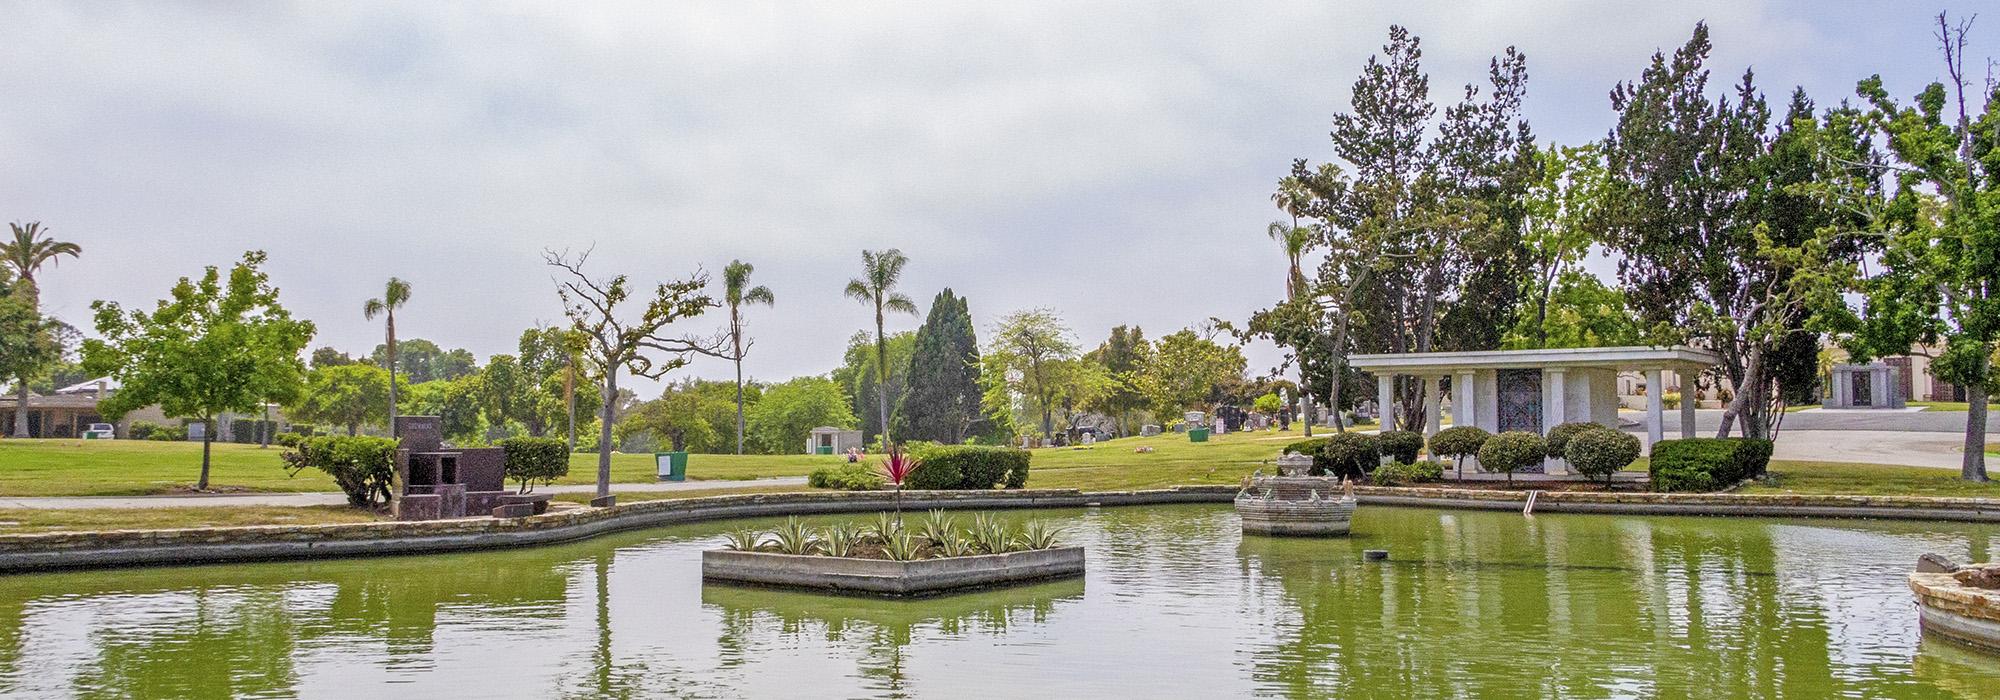 Greenwood Memorial Park, San Diego, CA